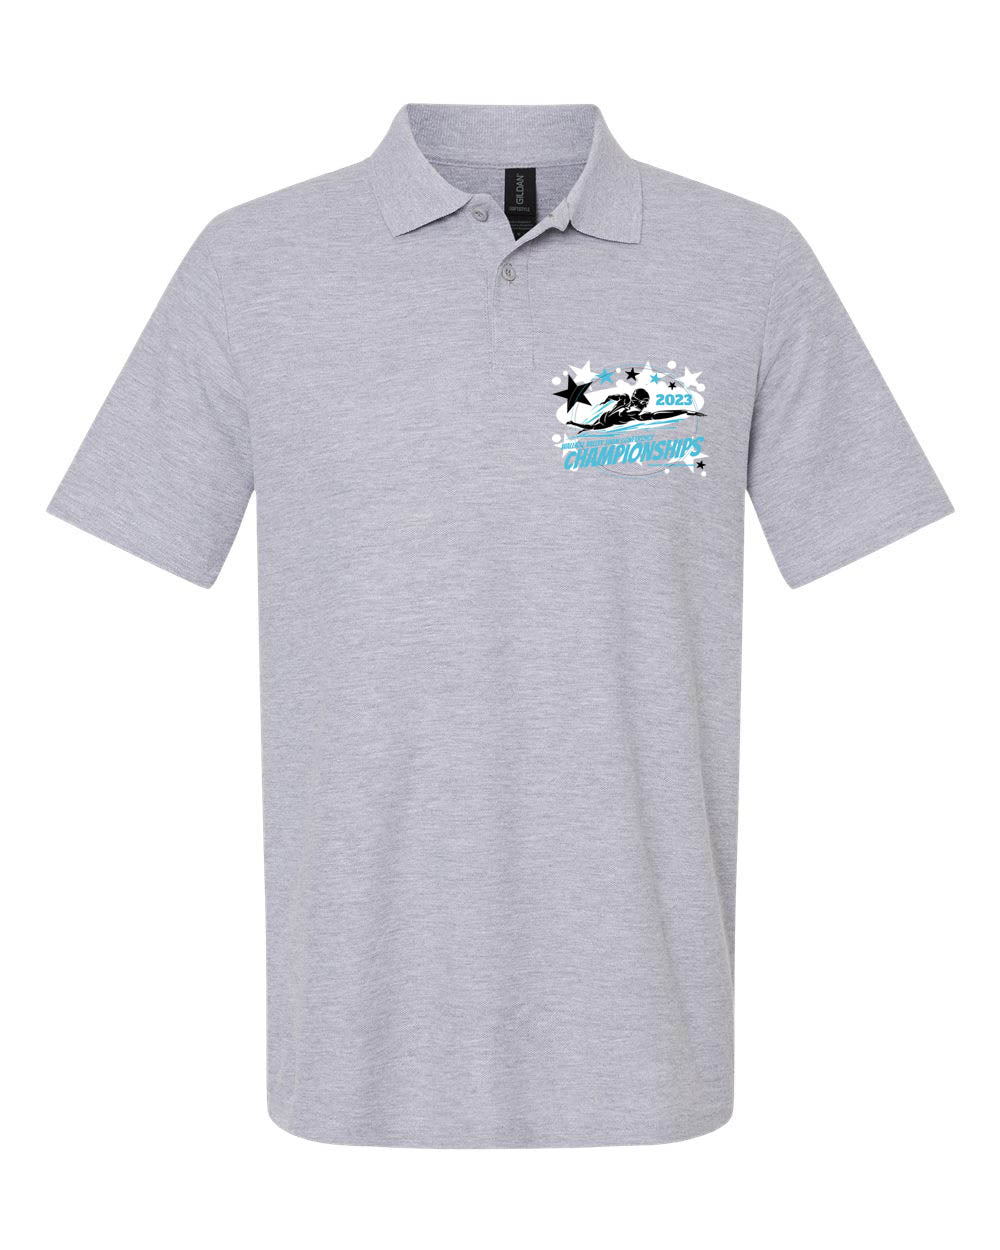 Barracudas Polo T-Shirt